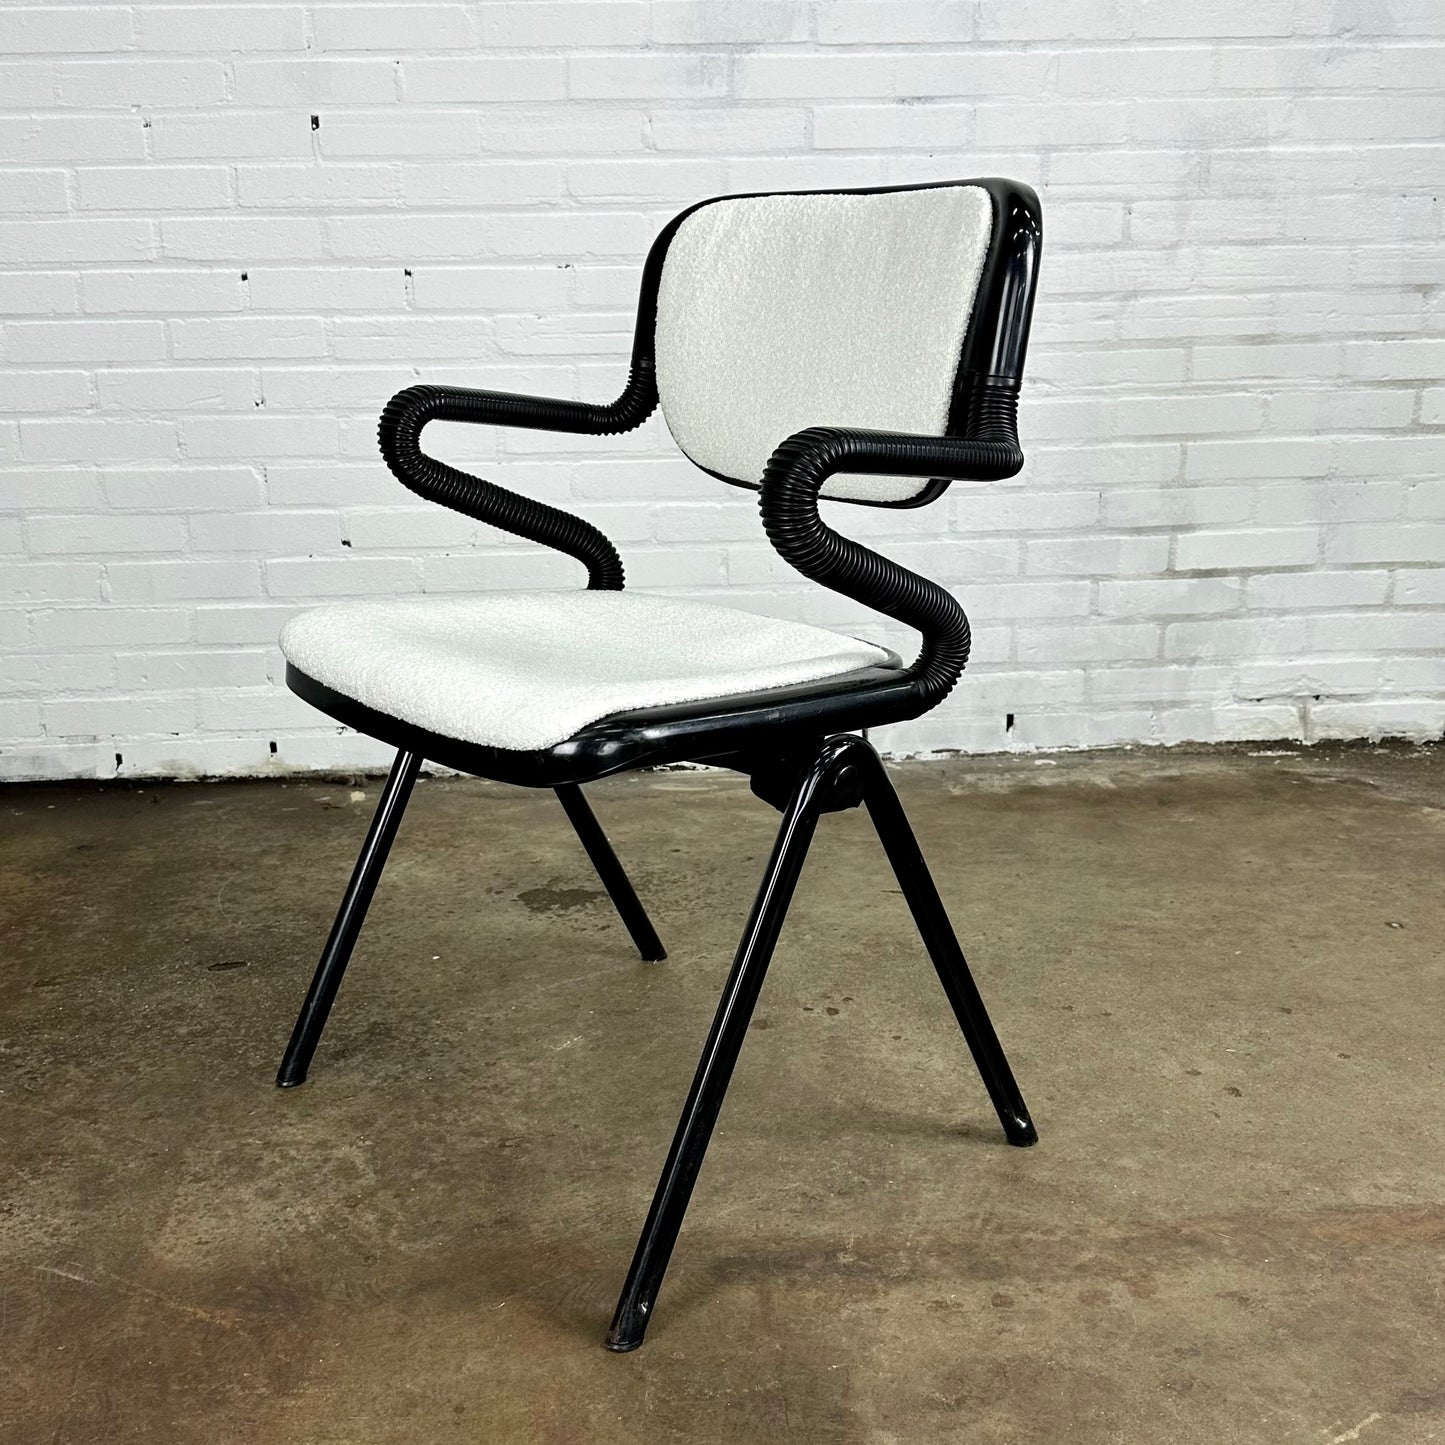 Vertebra chairs by Emilio Ambasz & Giancarlo Piretti (2 pieces available)